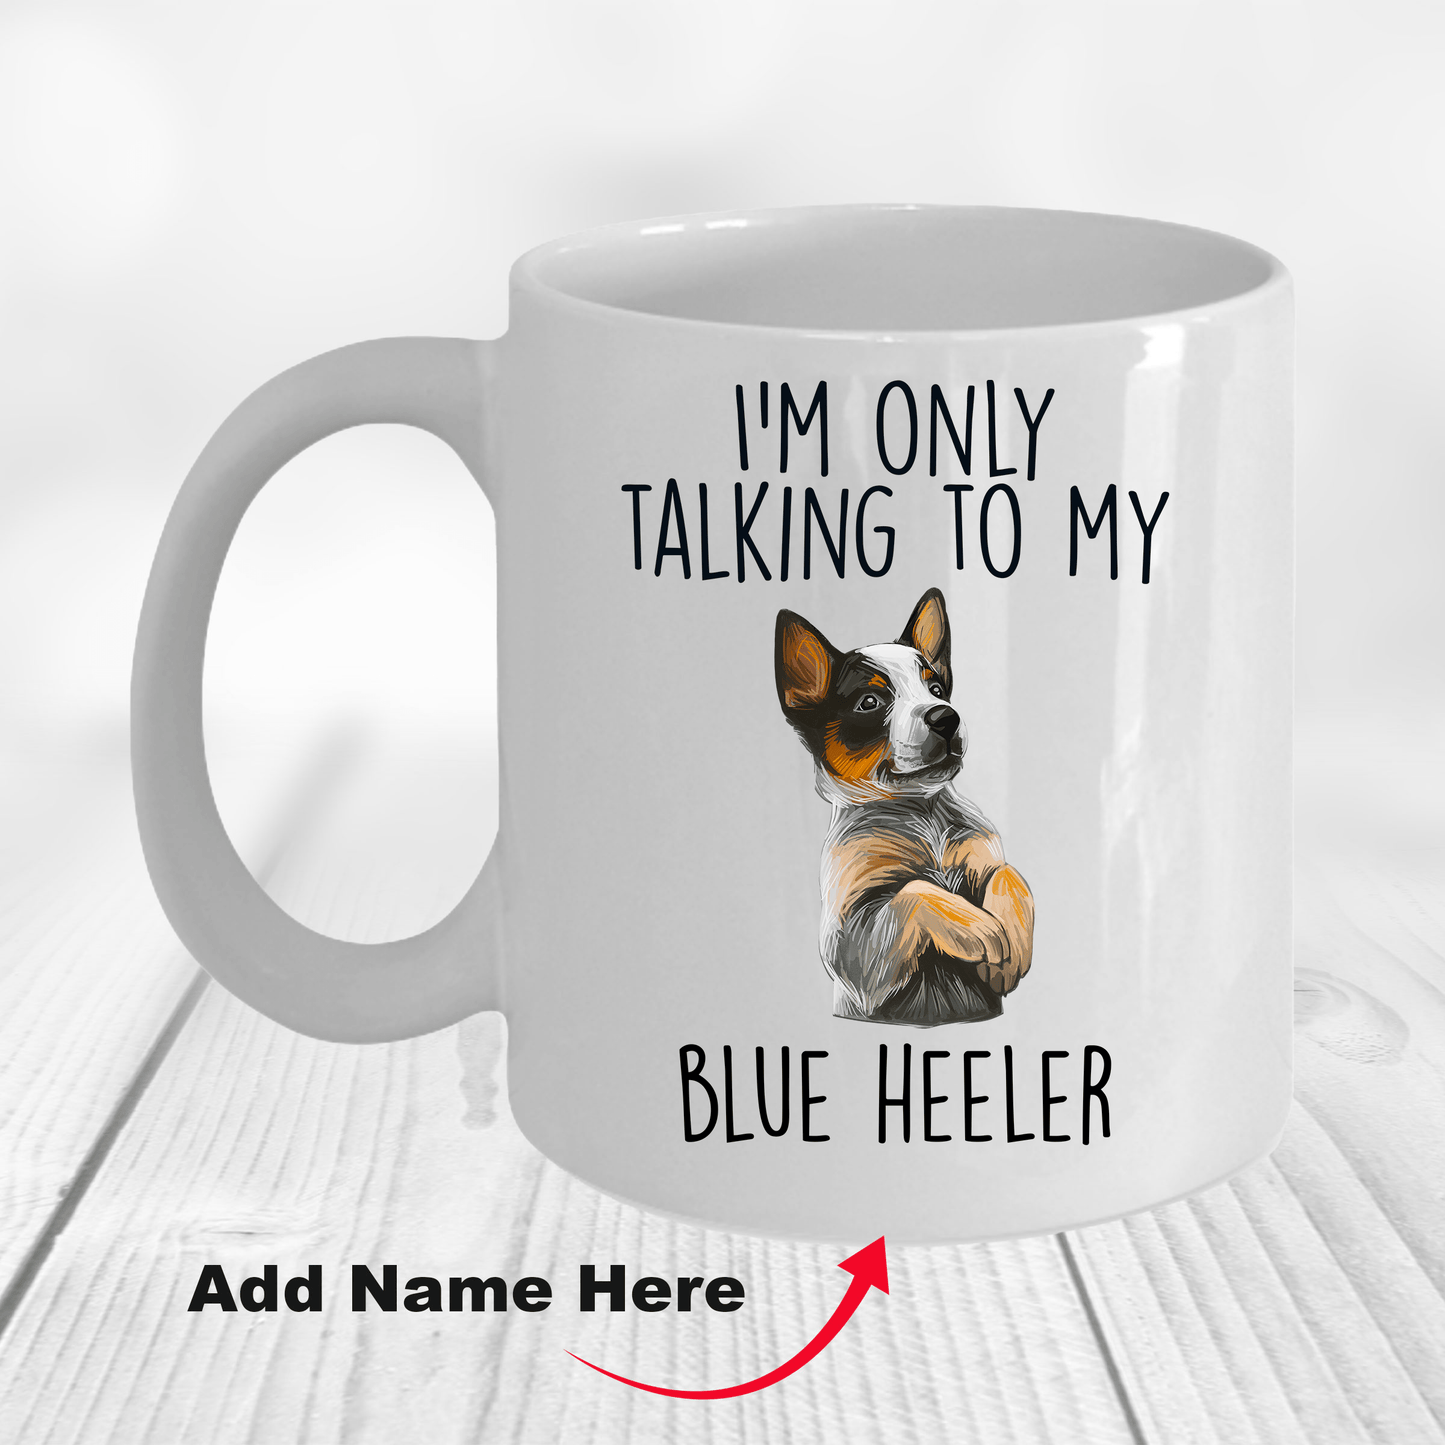 Funny I'm Only Talking To My Blue Heeler Dog Ceramic Coffee Mug